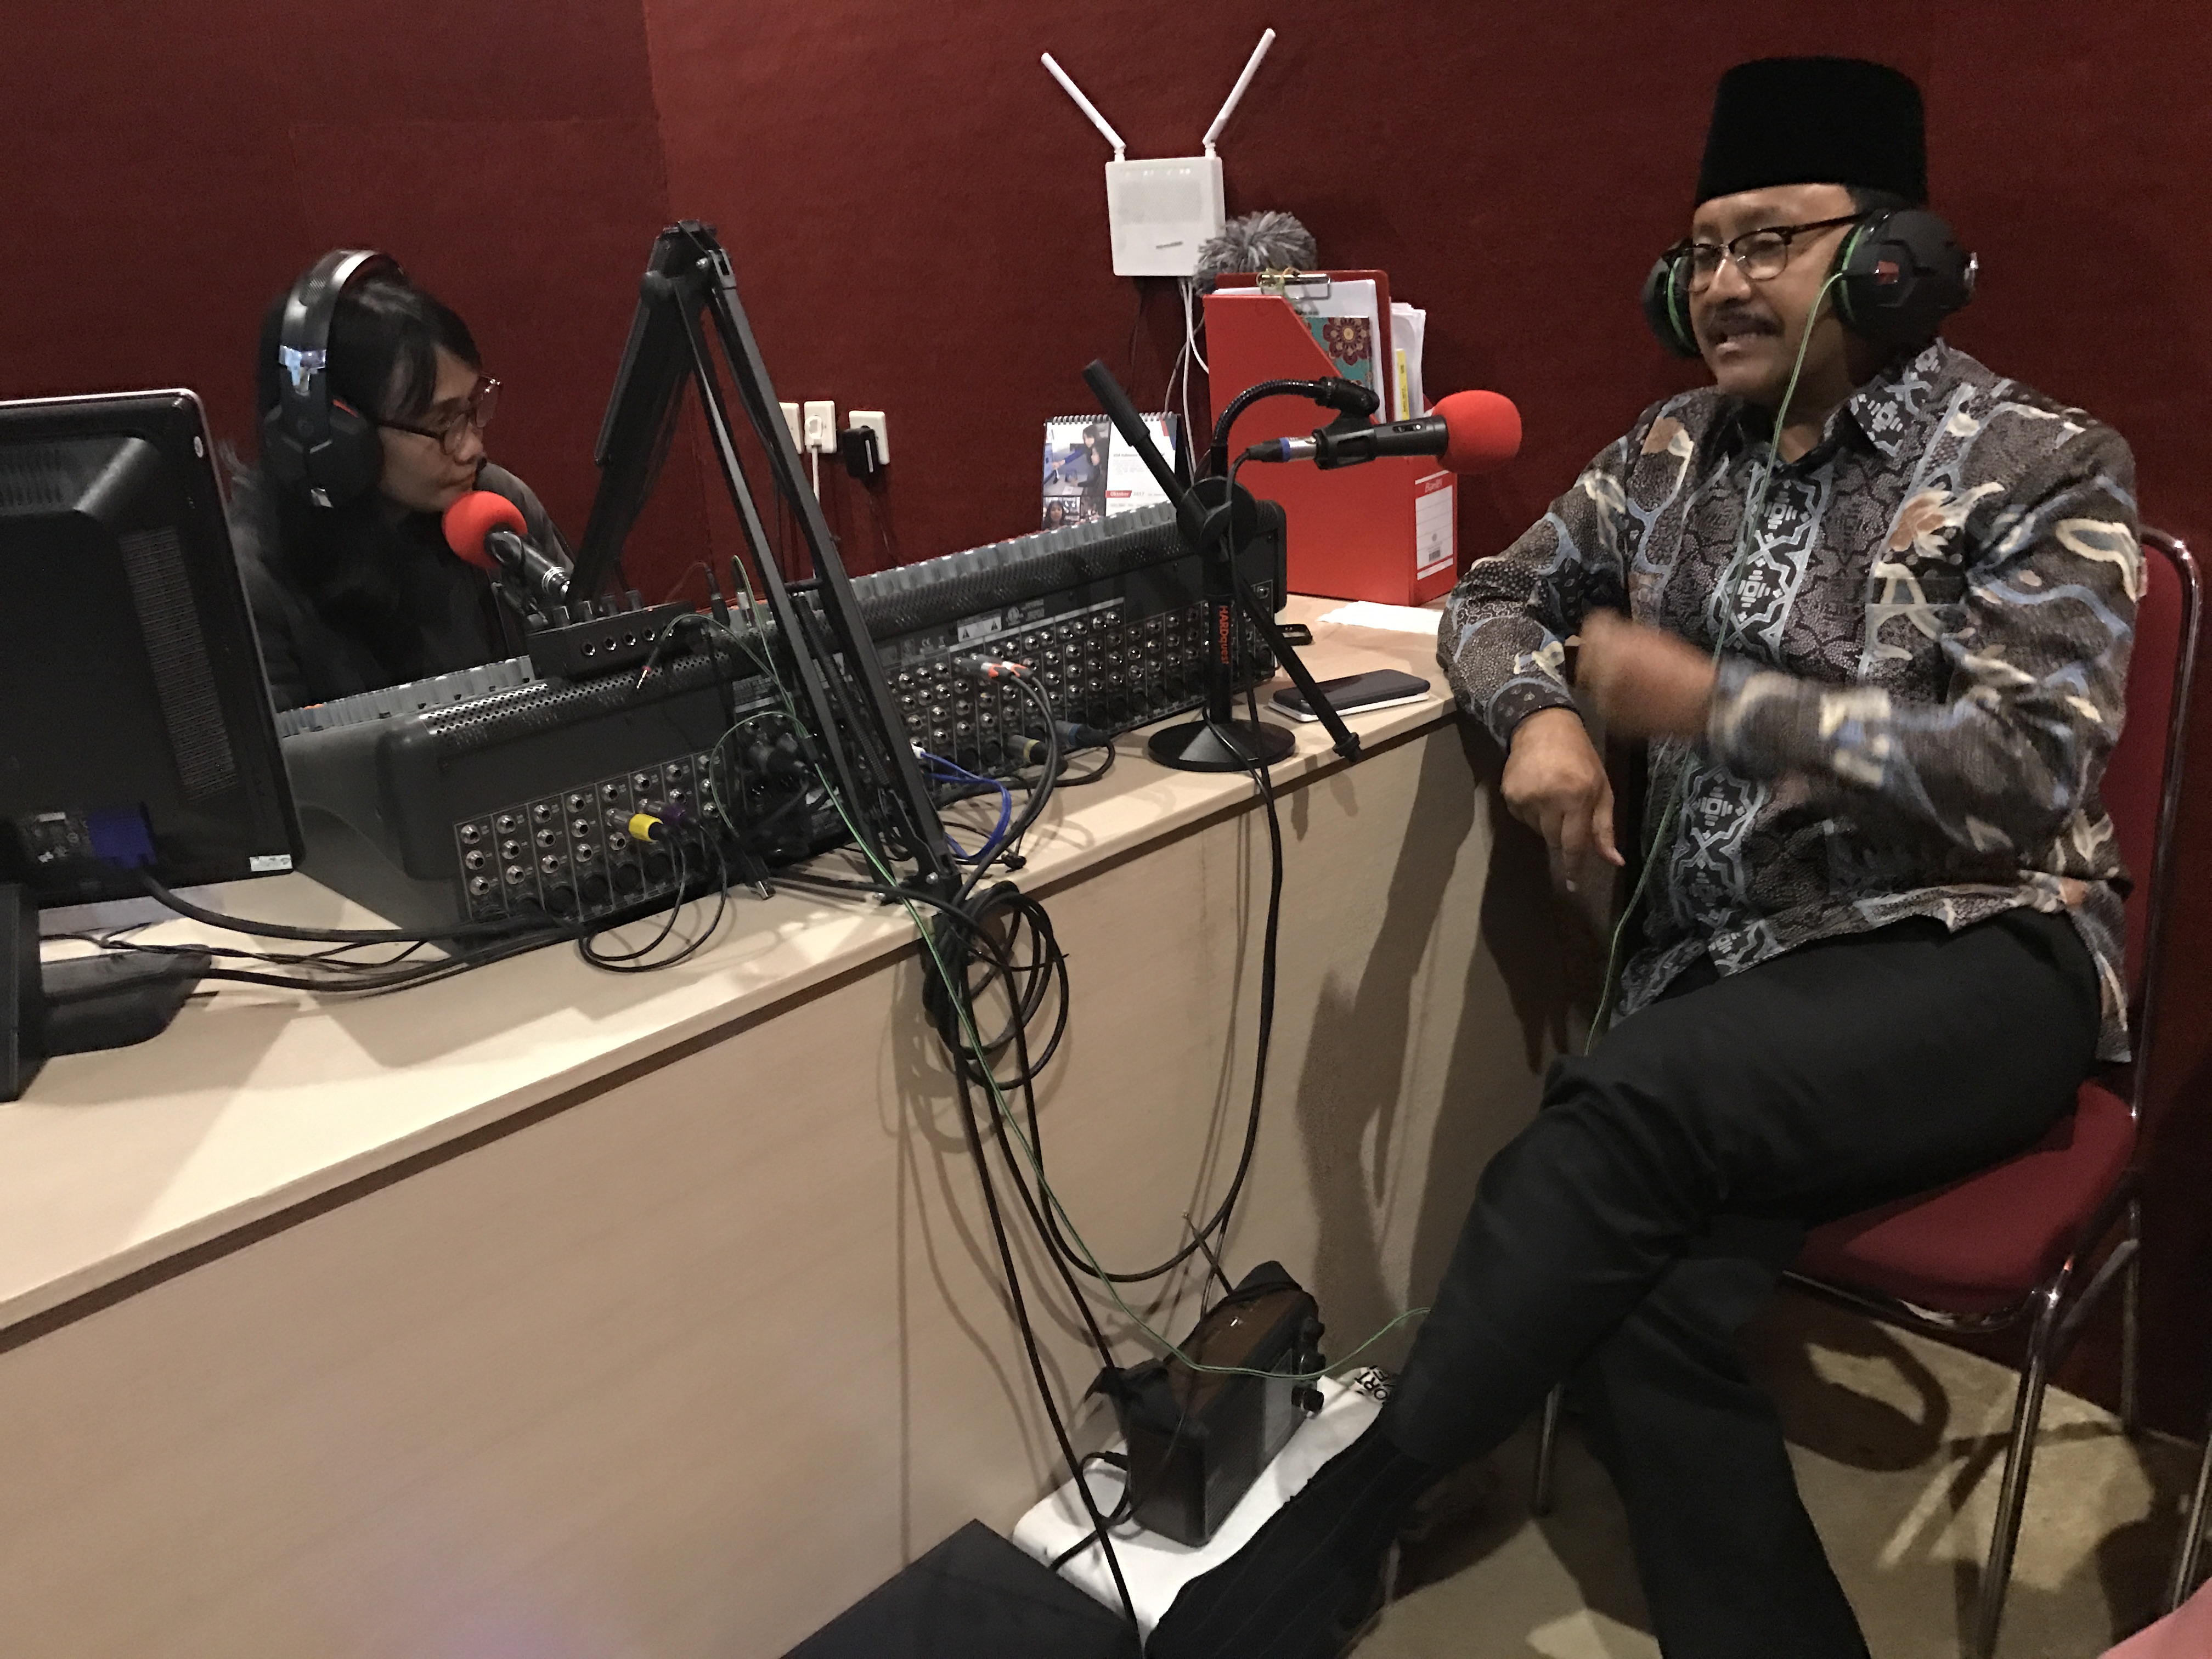 Cagub Jatim Saifullah Yusuf (Gus Ipul) ketika on air di radio PDIP Jatim, Rabu (18:10/2017).